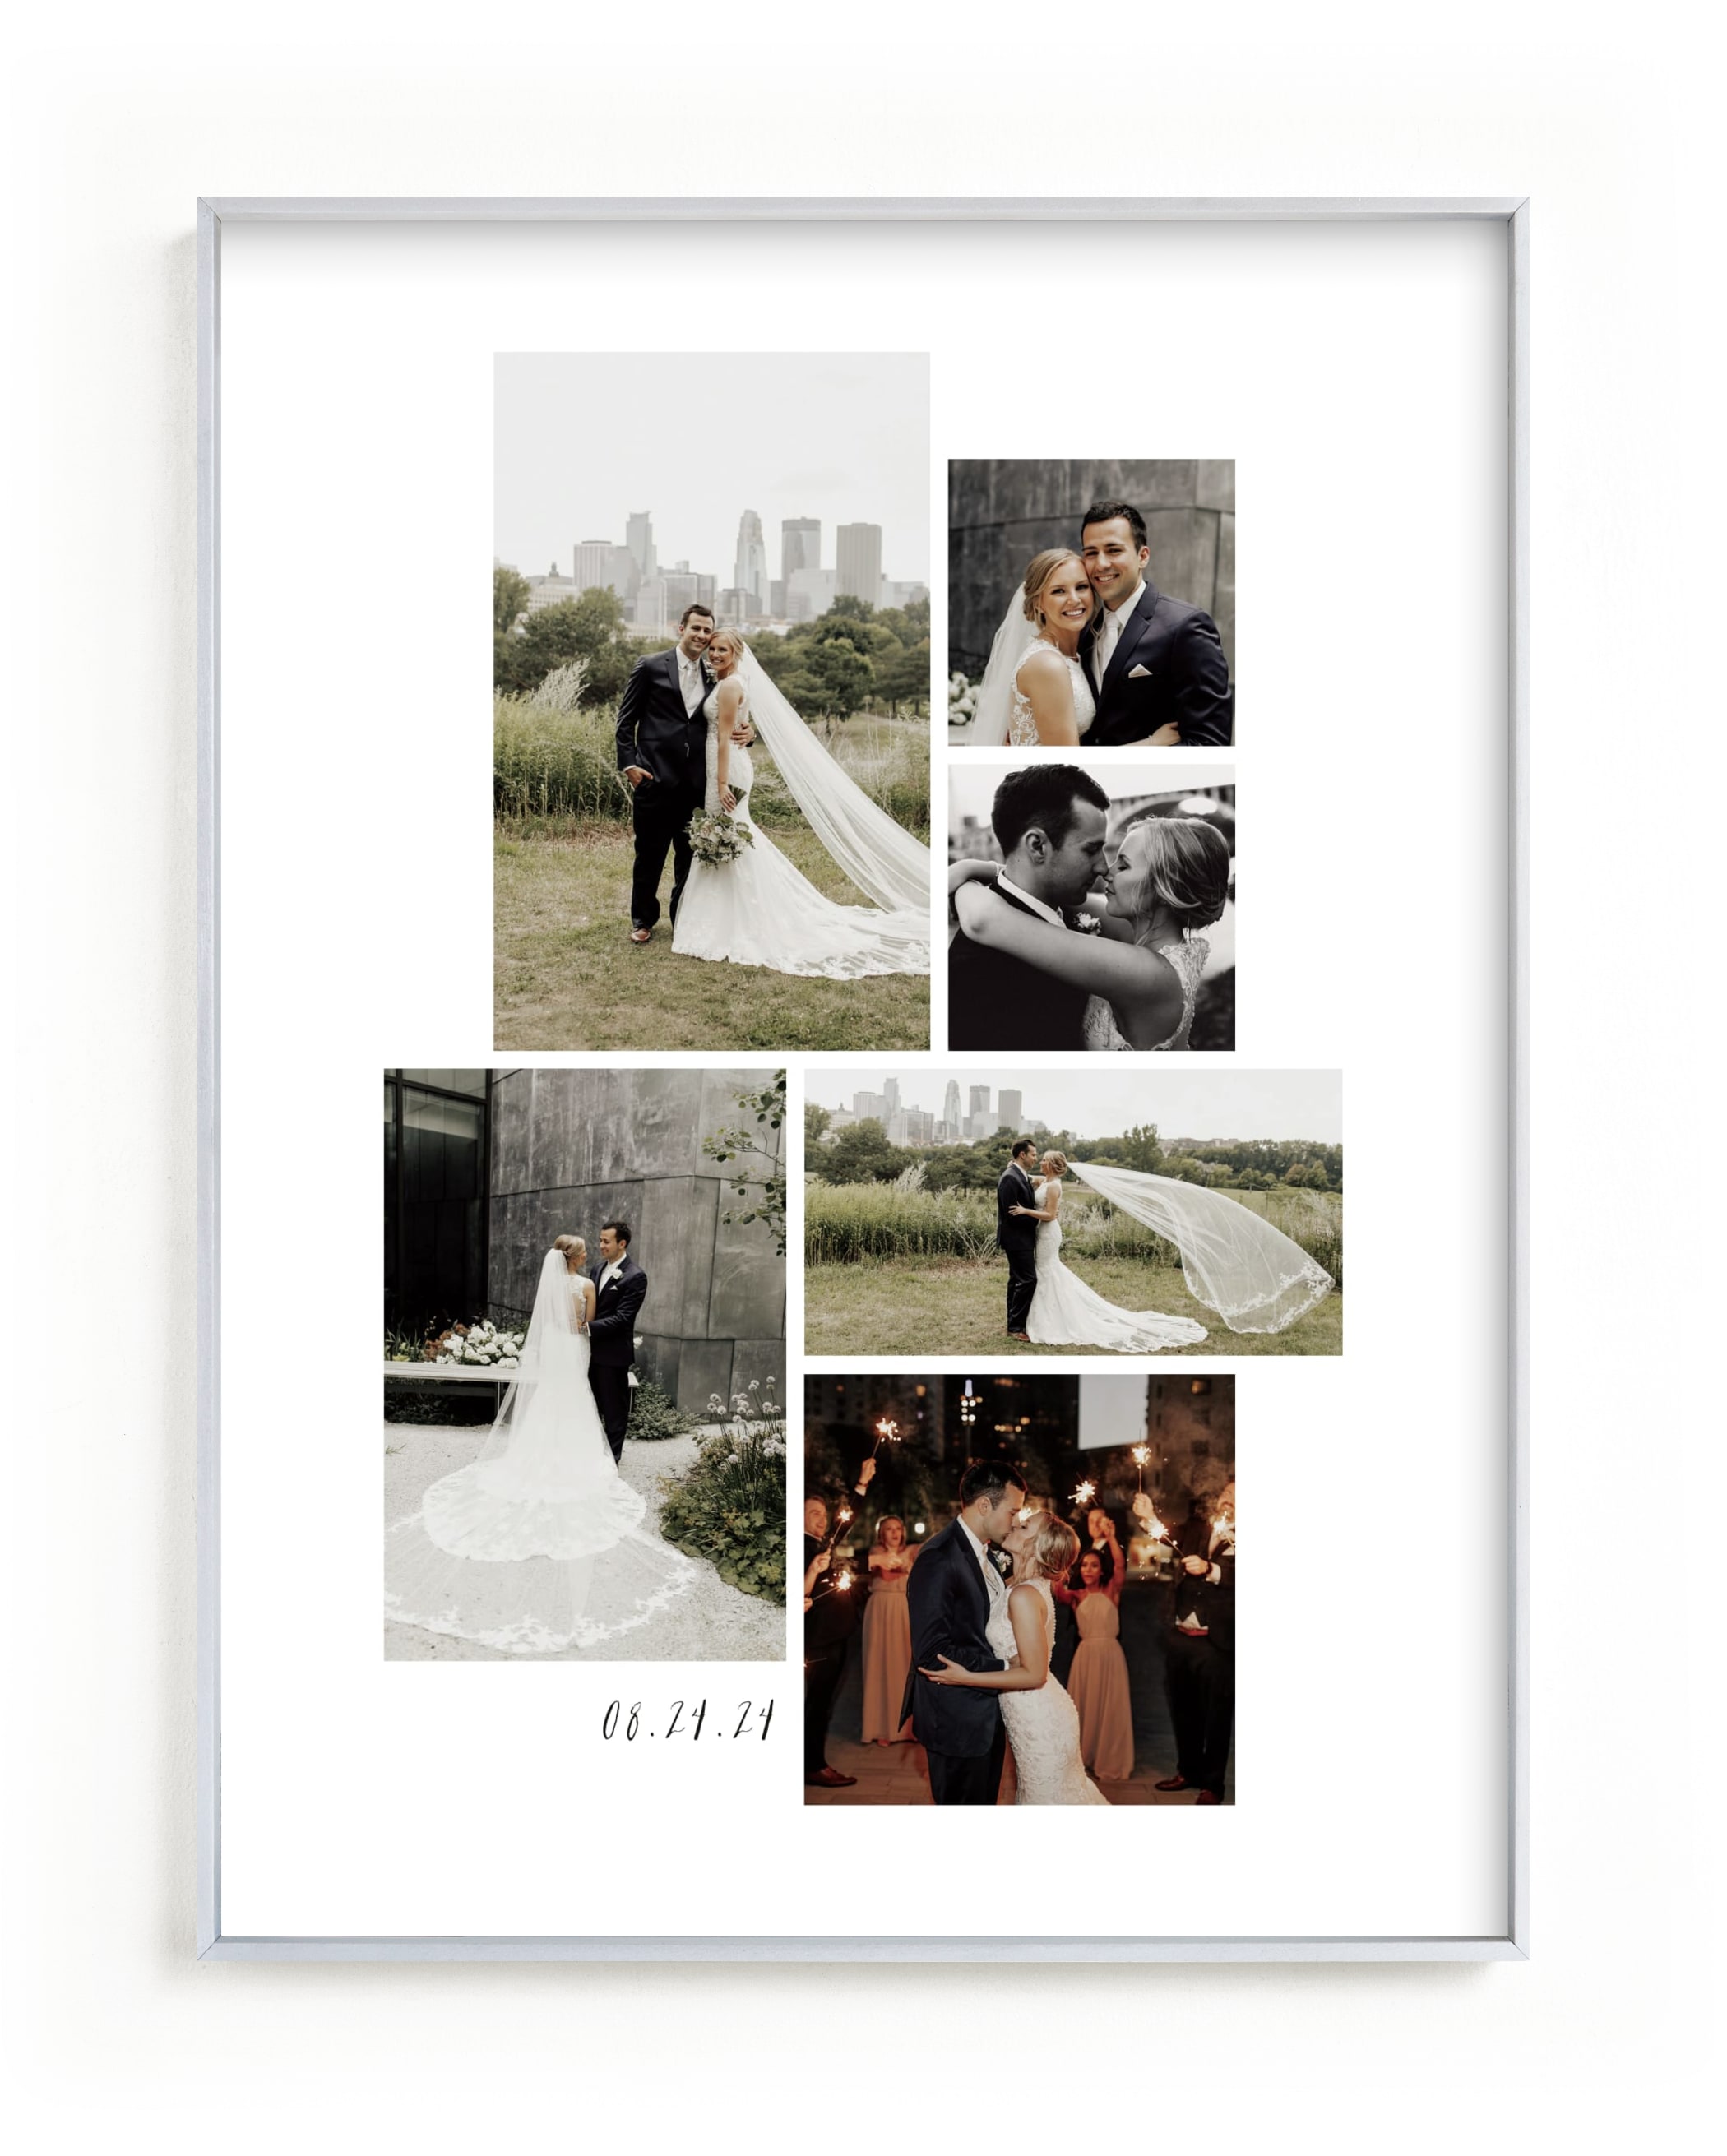 Wedding Moments, designed by Hooray Creative